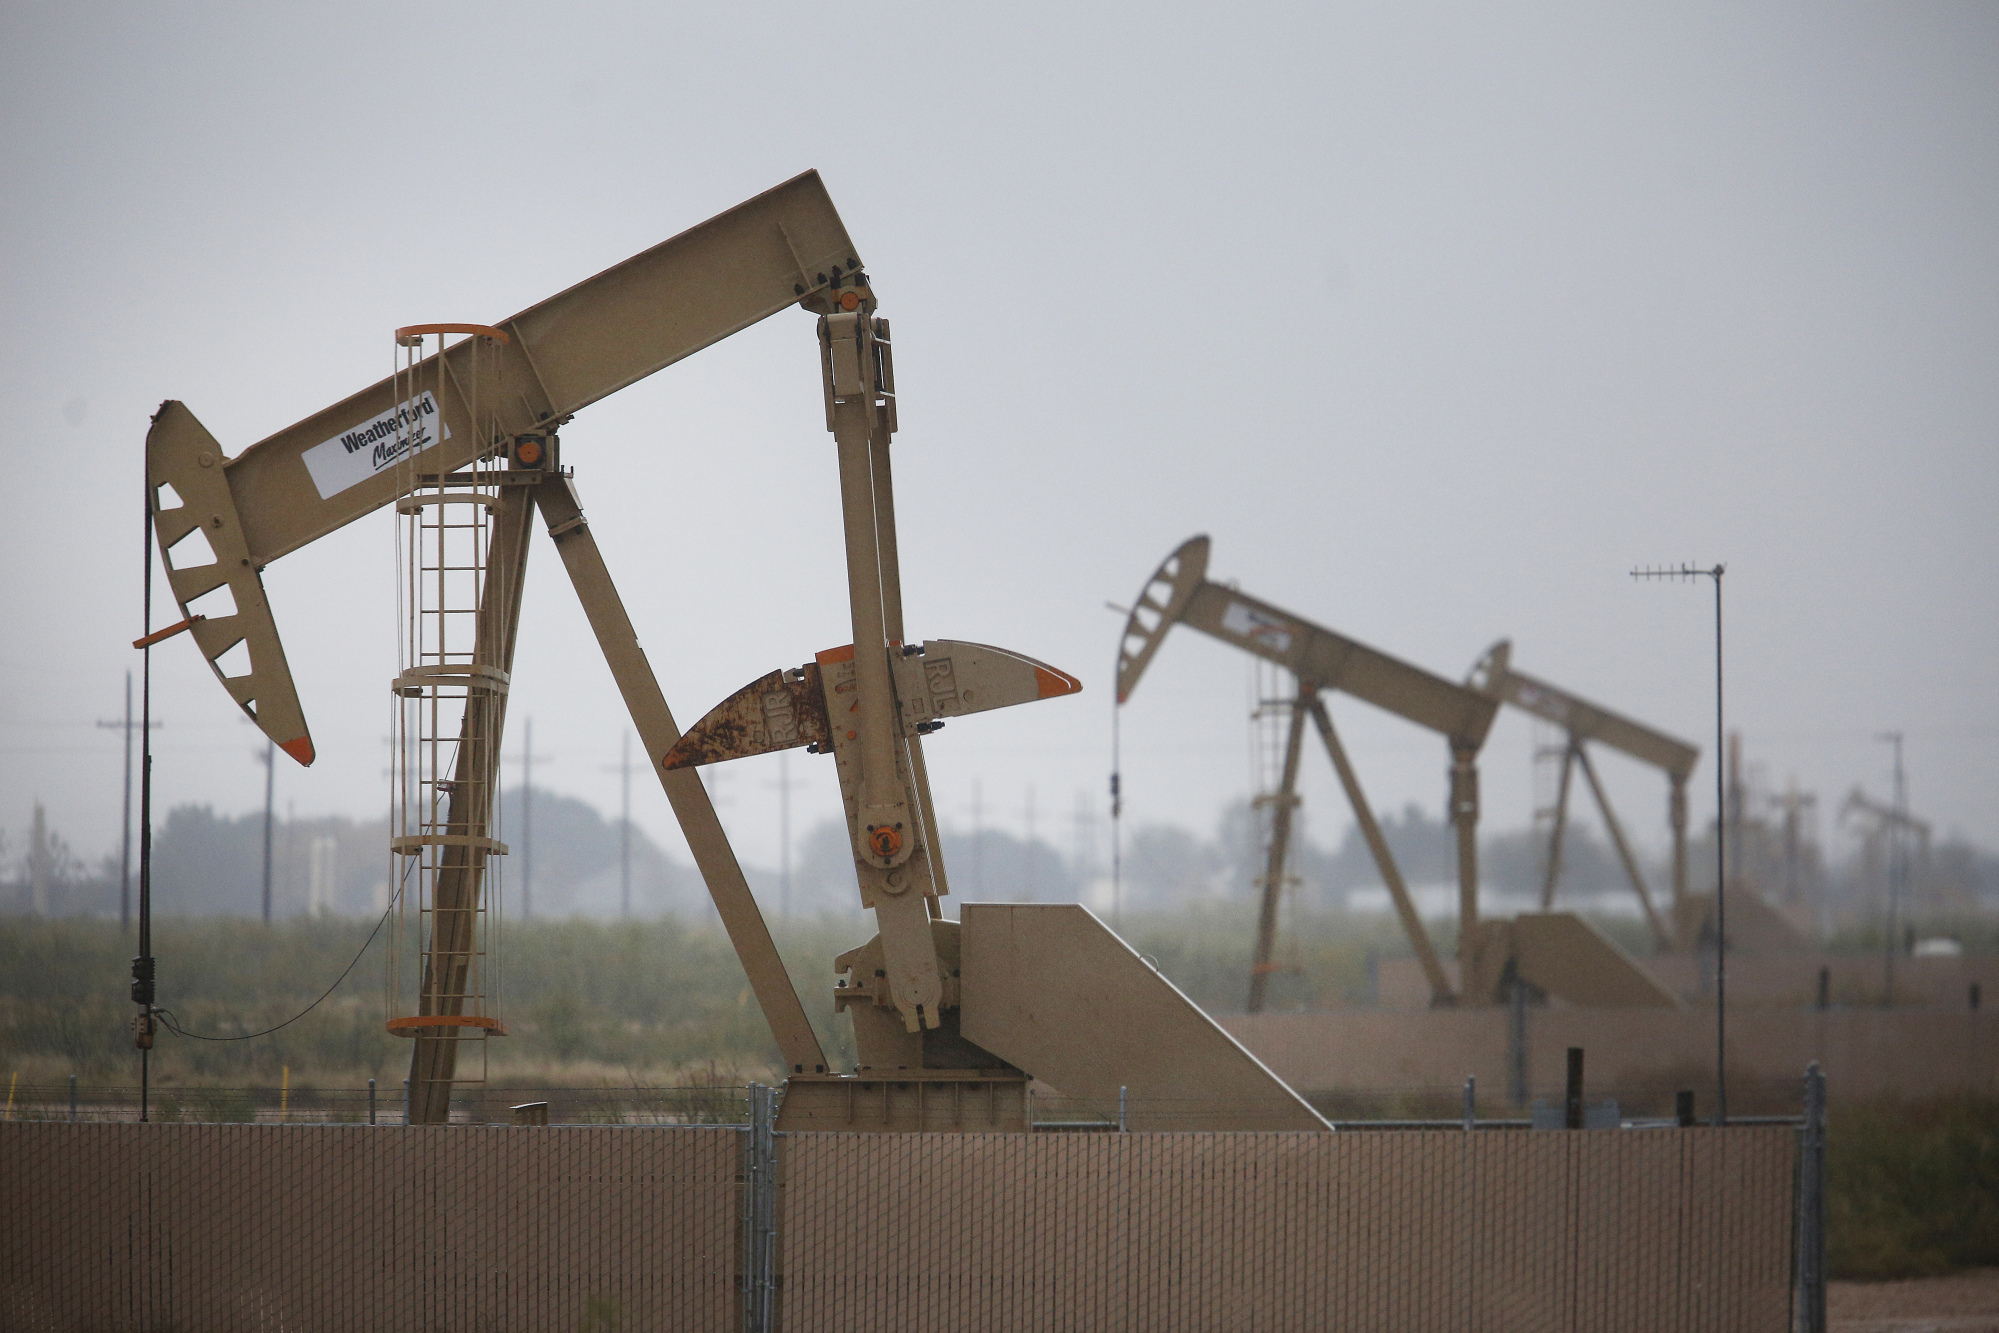 Electric oil pump jacks stand in the oil fields surrounding Midland, Texas, U.S., on Wednesday, Nov. 8, 2017. Photographer: Luke Sharrett/Bloomberg